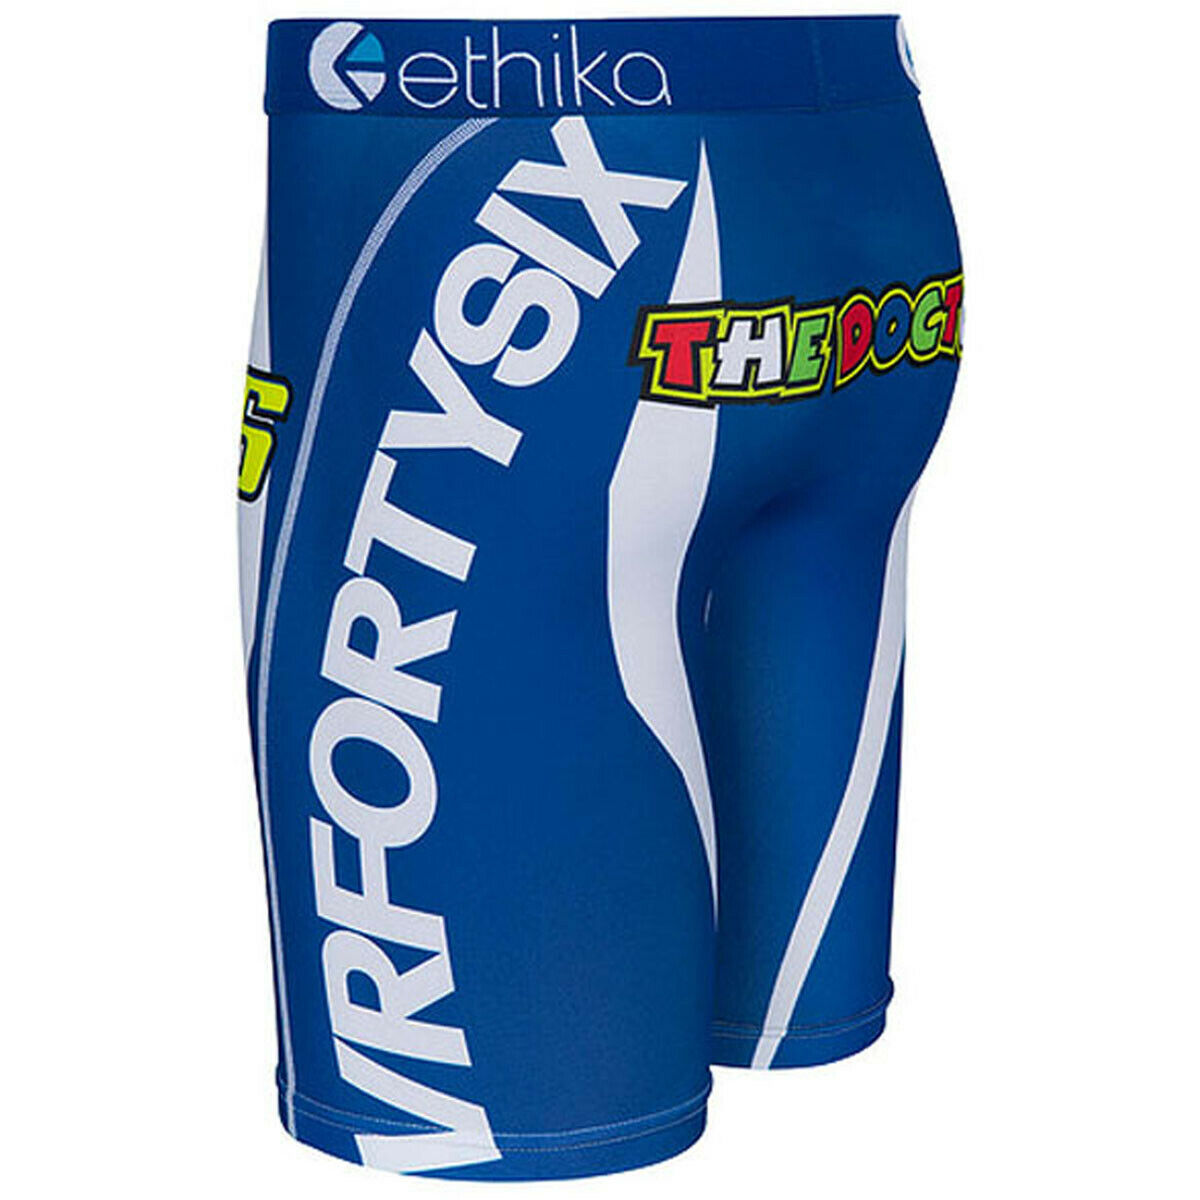 Ethika The Staple Valentino Rossi The Doctor Underwear - ExtremeSupply.com